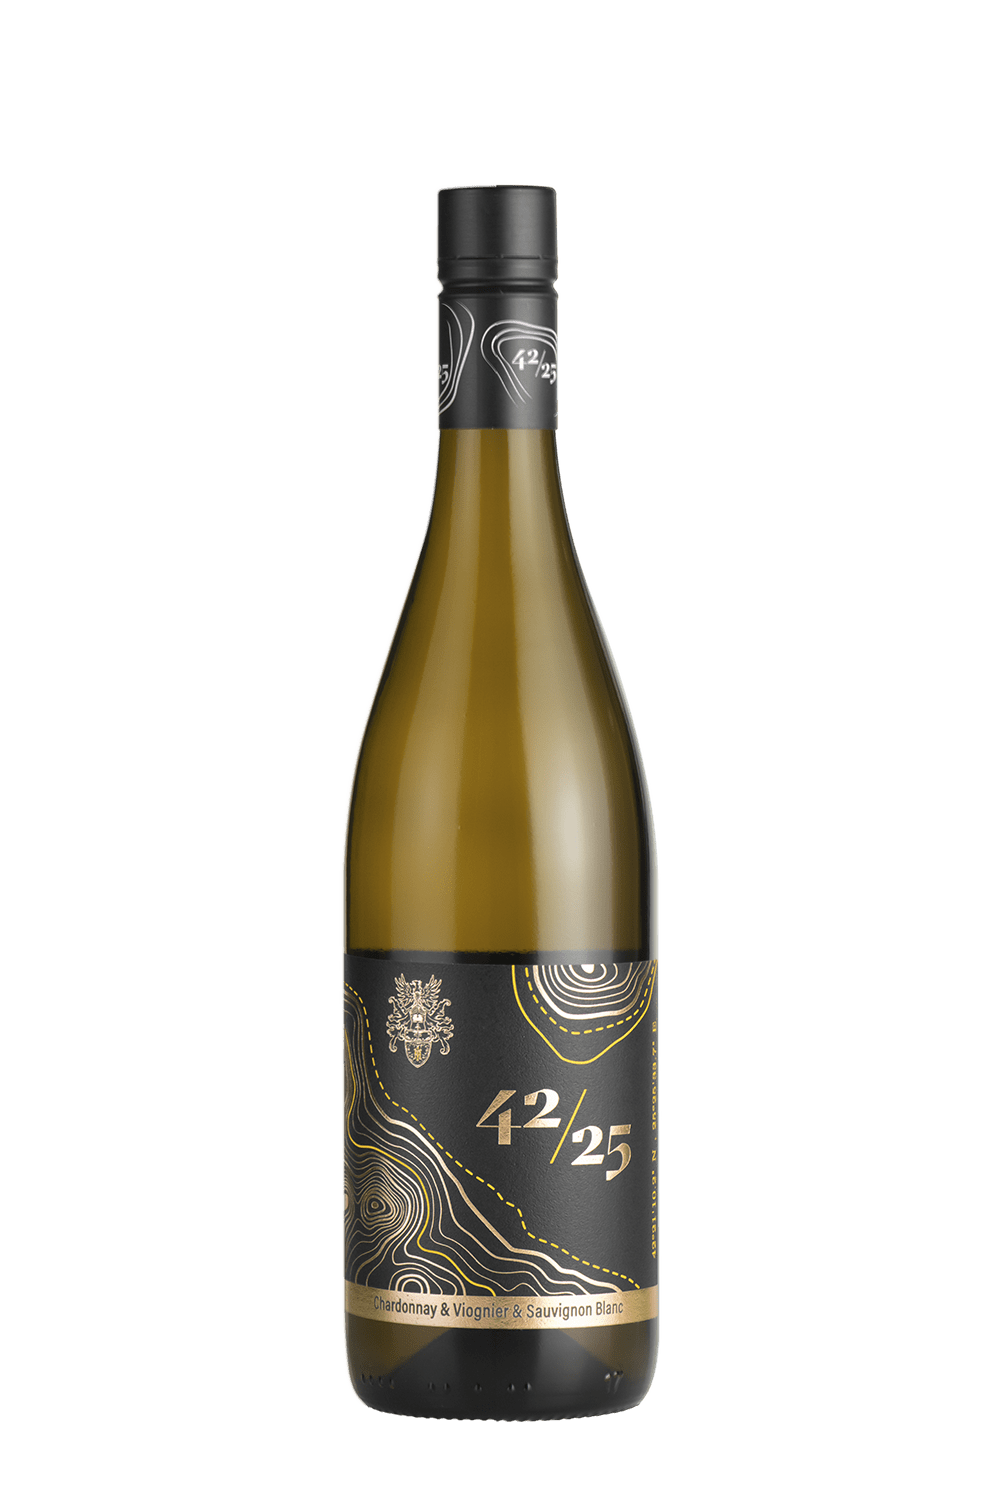 42/25 Chardonnay & Viognier & Sauvignon Blanc, 0.75 L